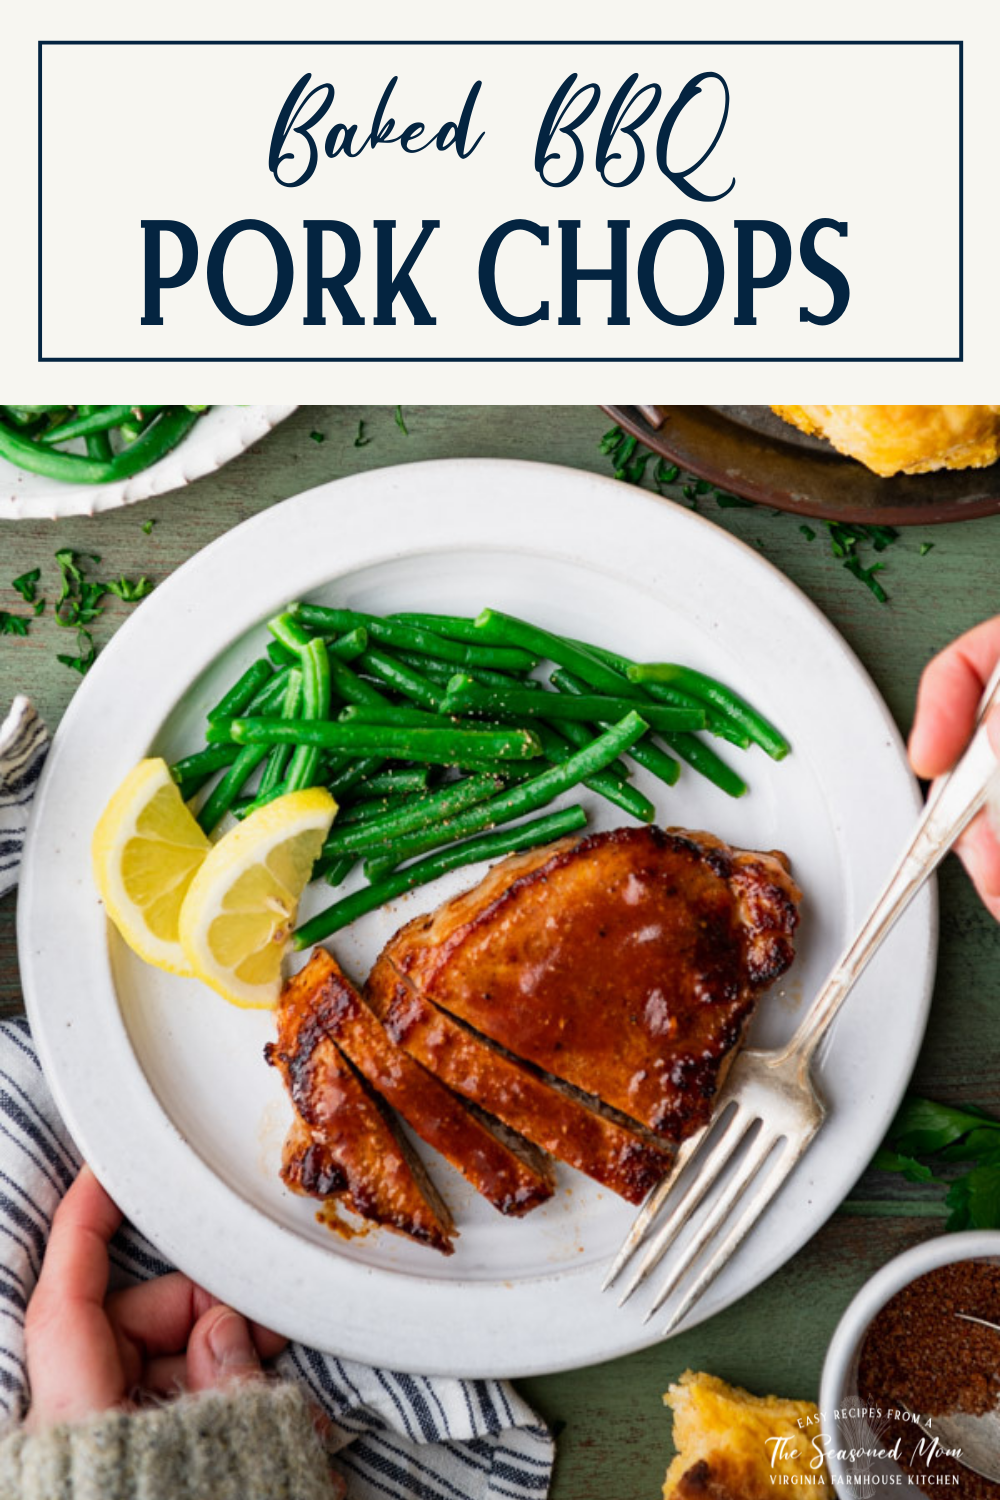 Baked BBQ Pork Chops - The Seasoned Mom